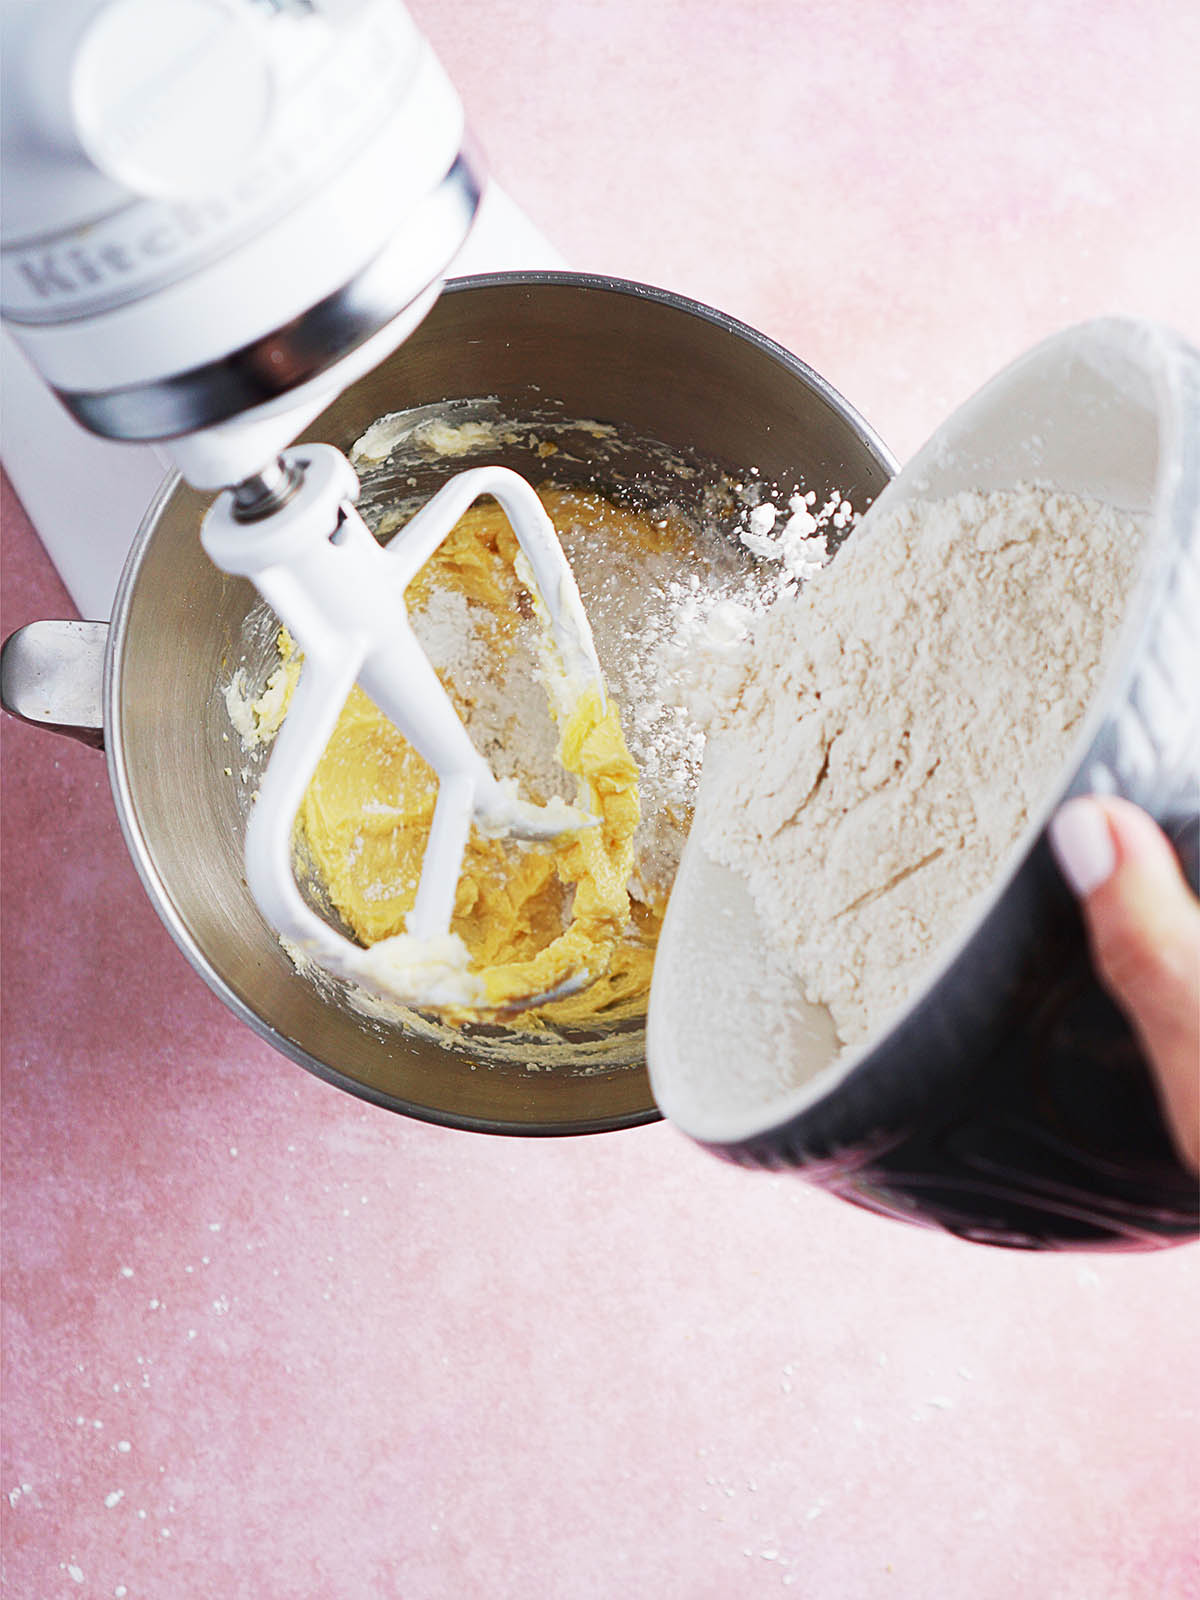 Pouring flour into a stand mixer.